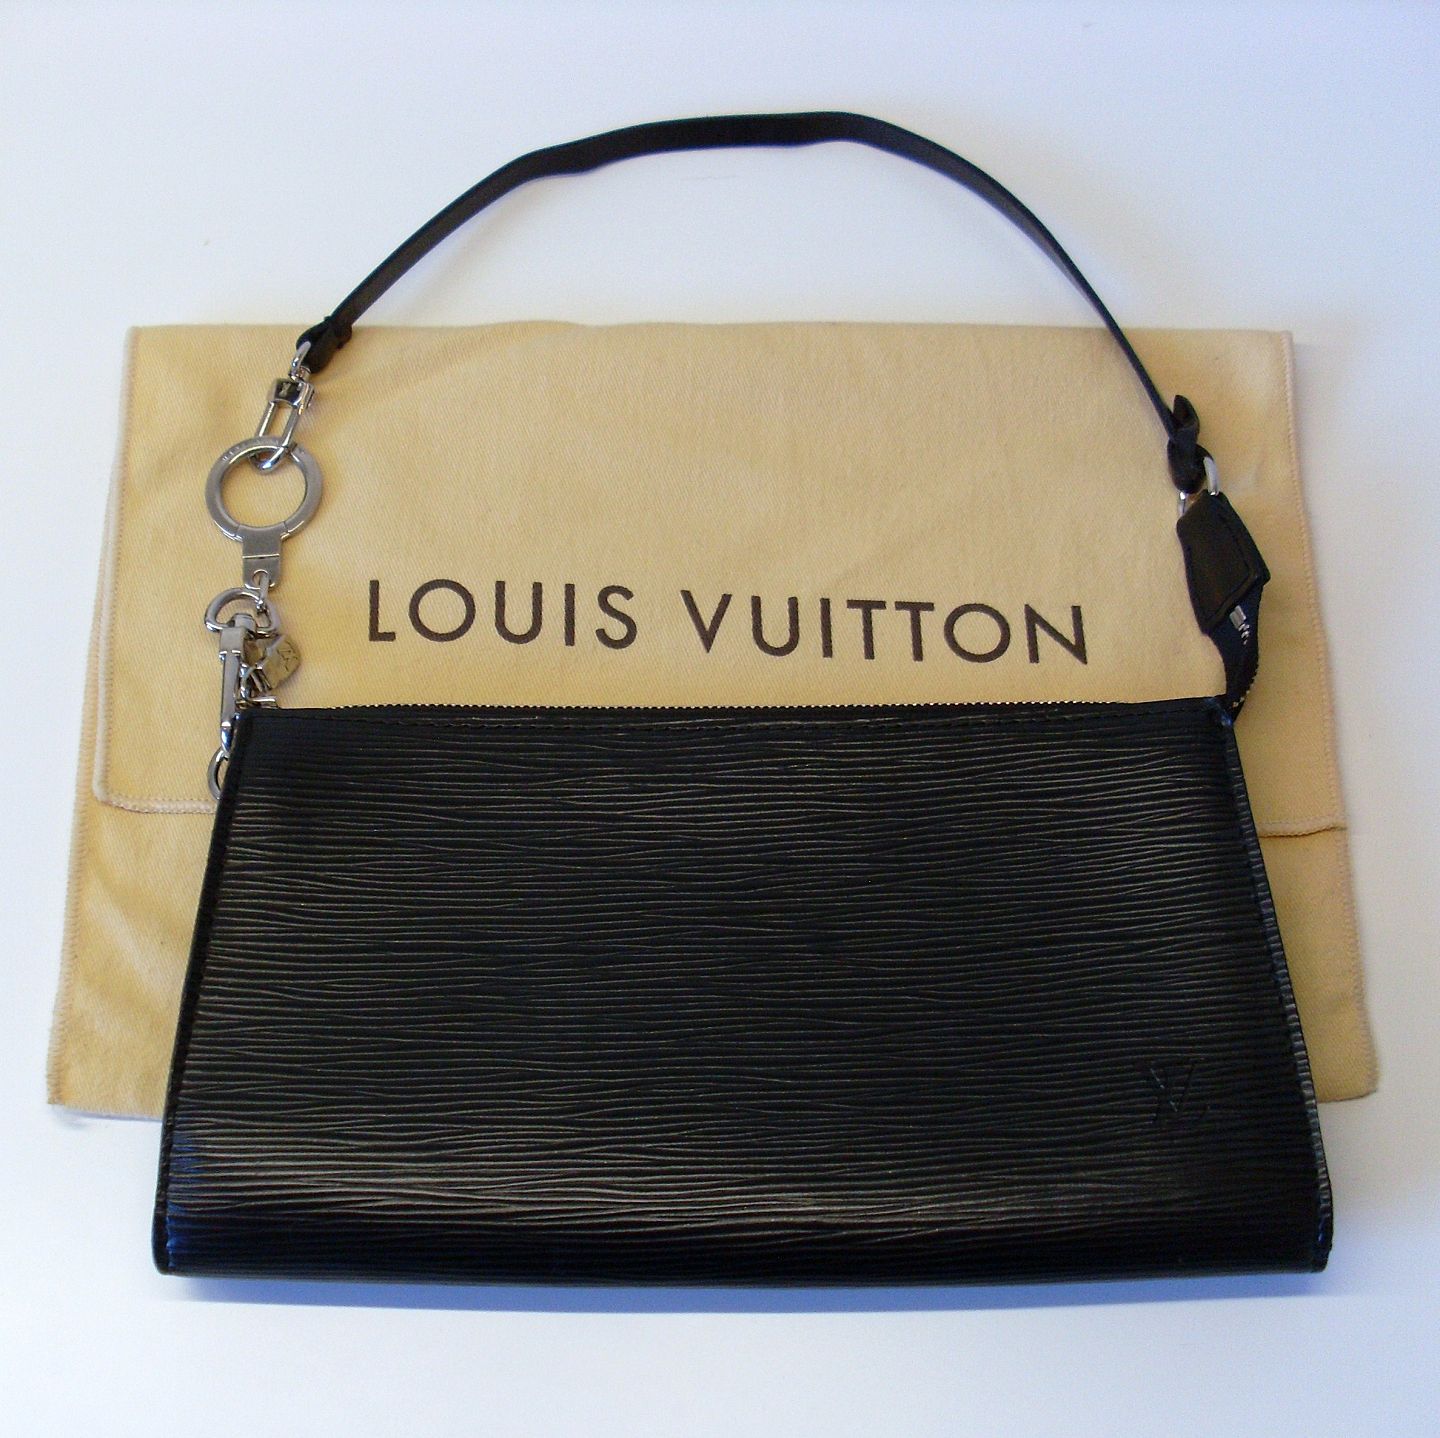 www.Antikvitet.net - Louis Vuitton taske sort læder